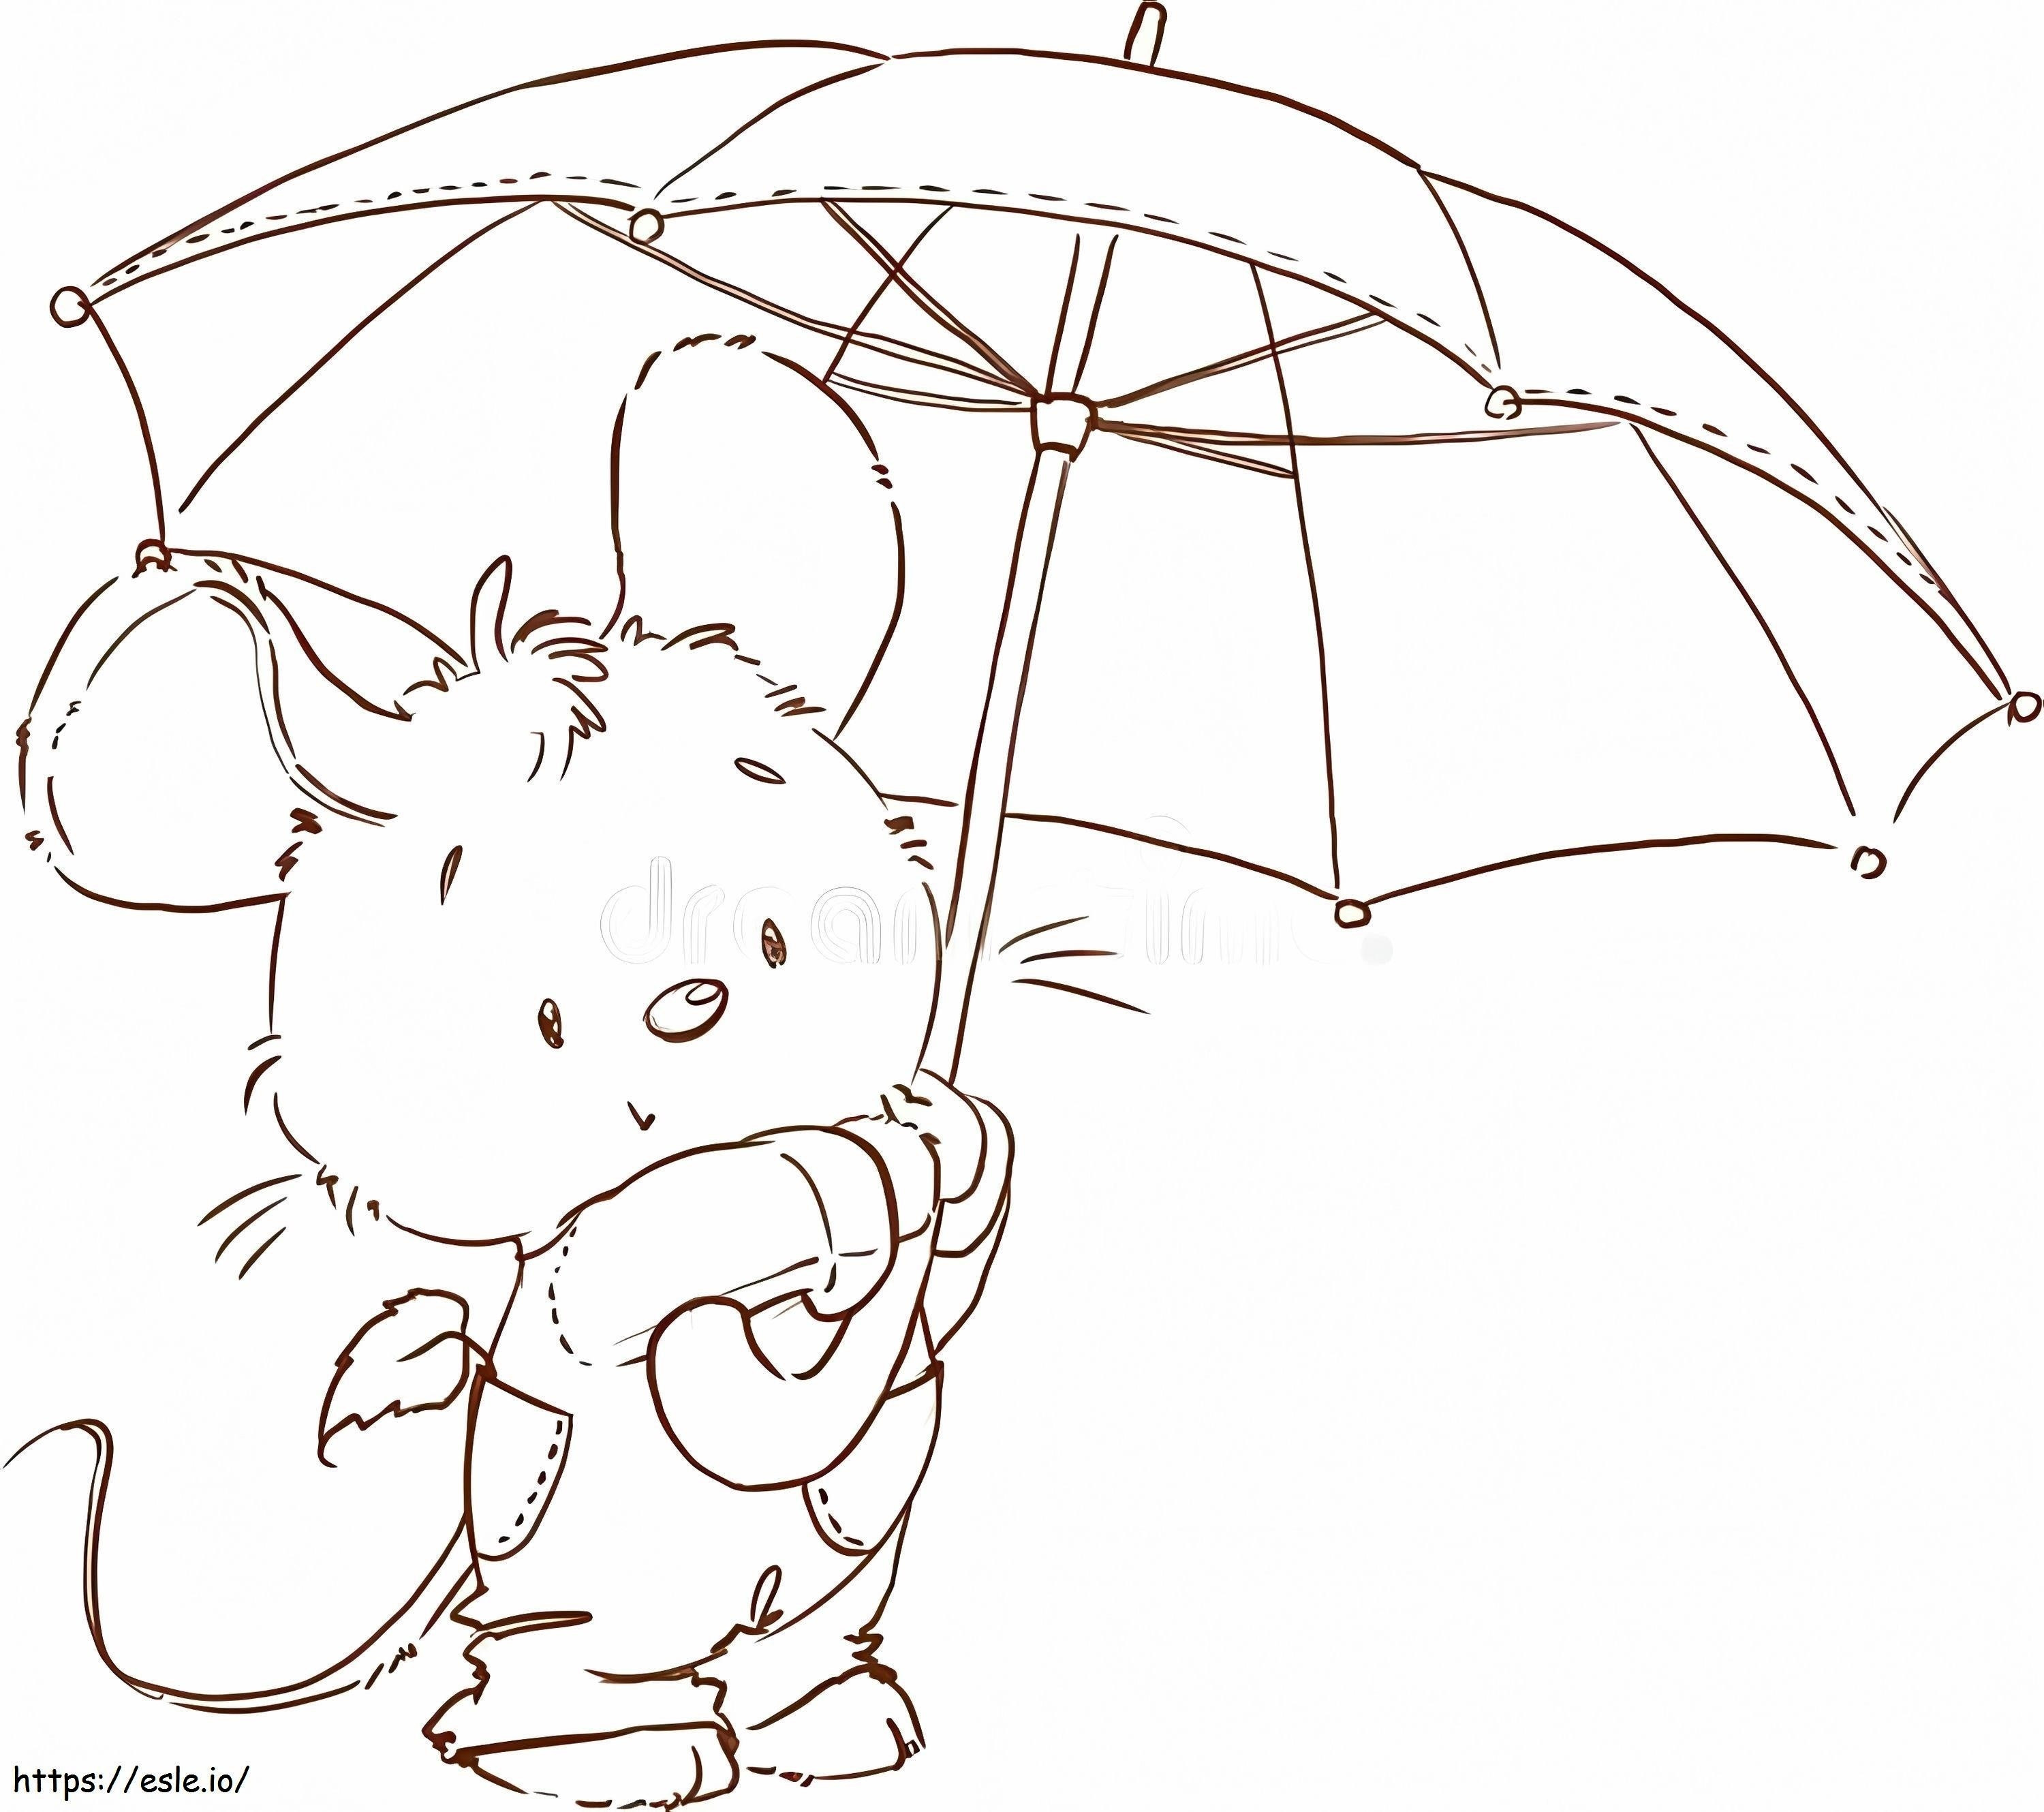 Rato com guarda-chuva para colorir